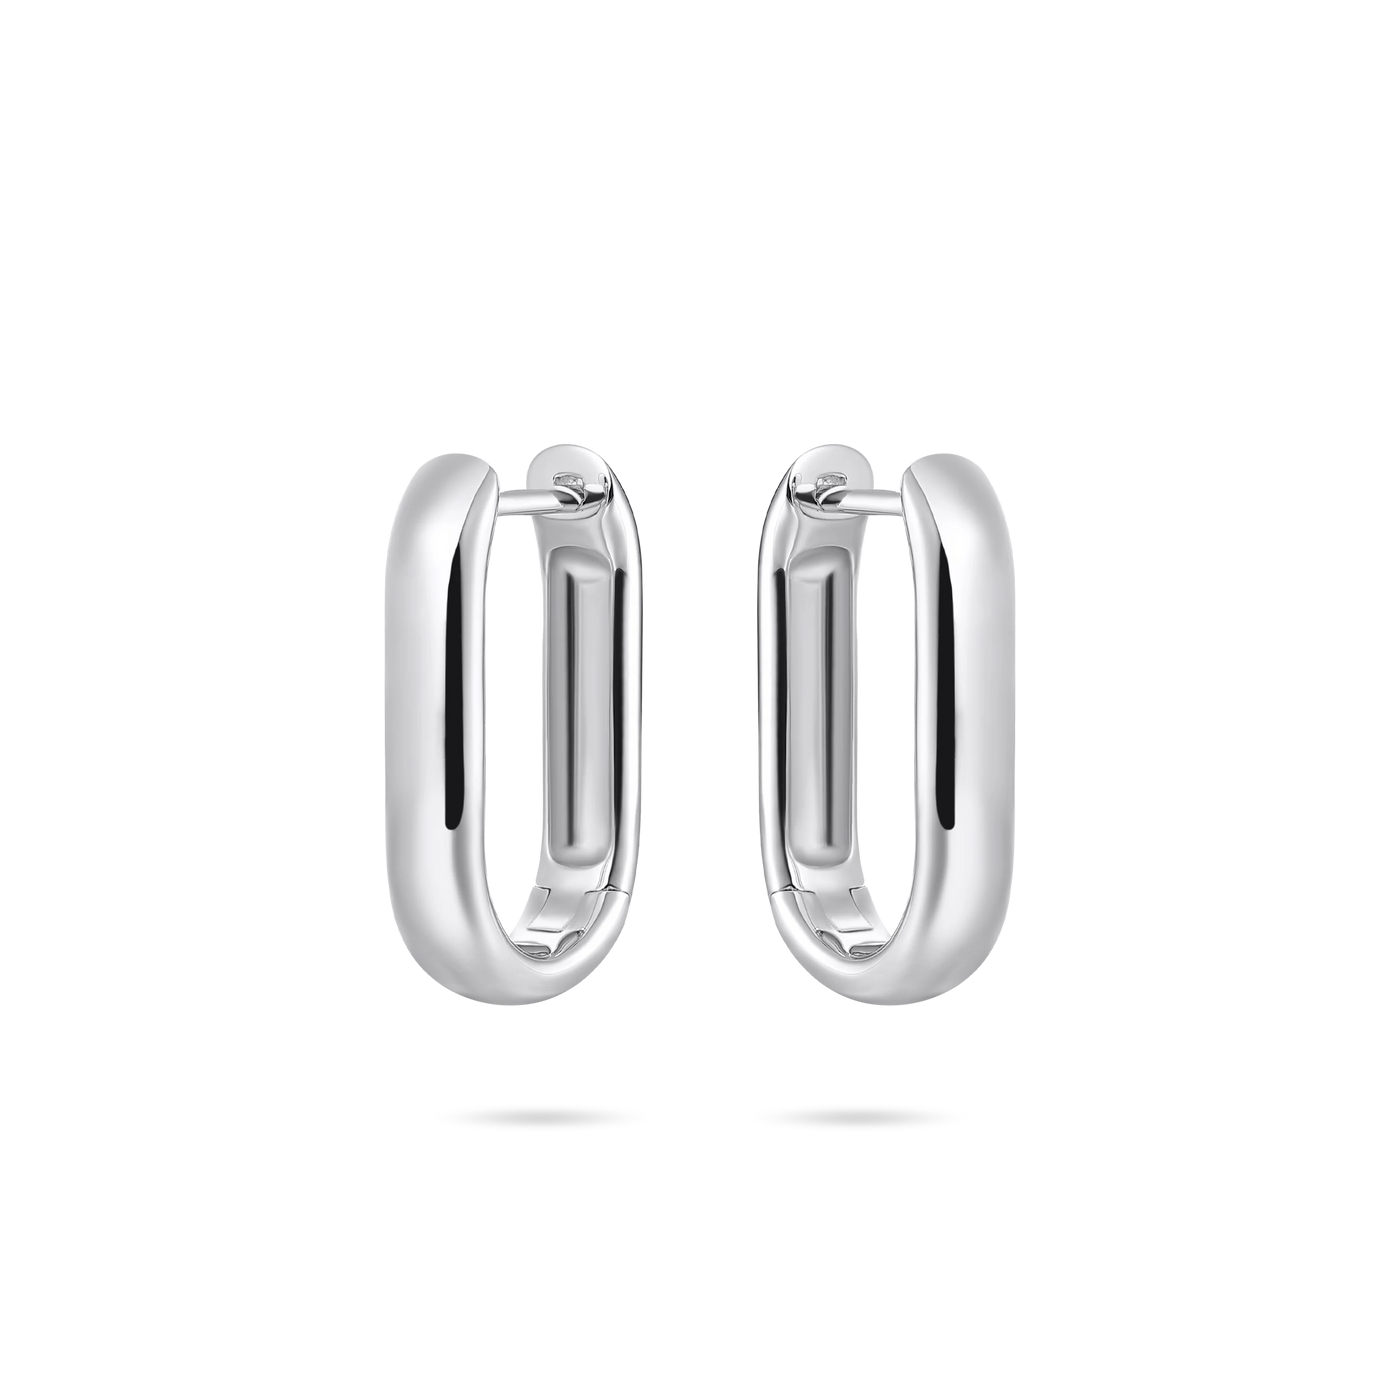 Gisser Sterling Silver Earrings - Bold 20 mm Long Hoop Earrings